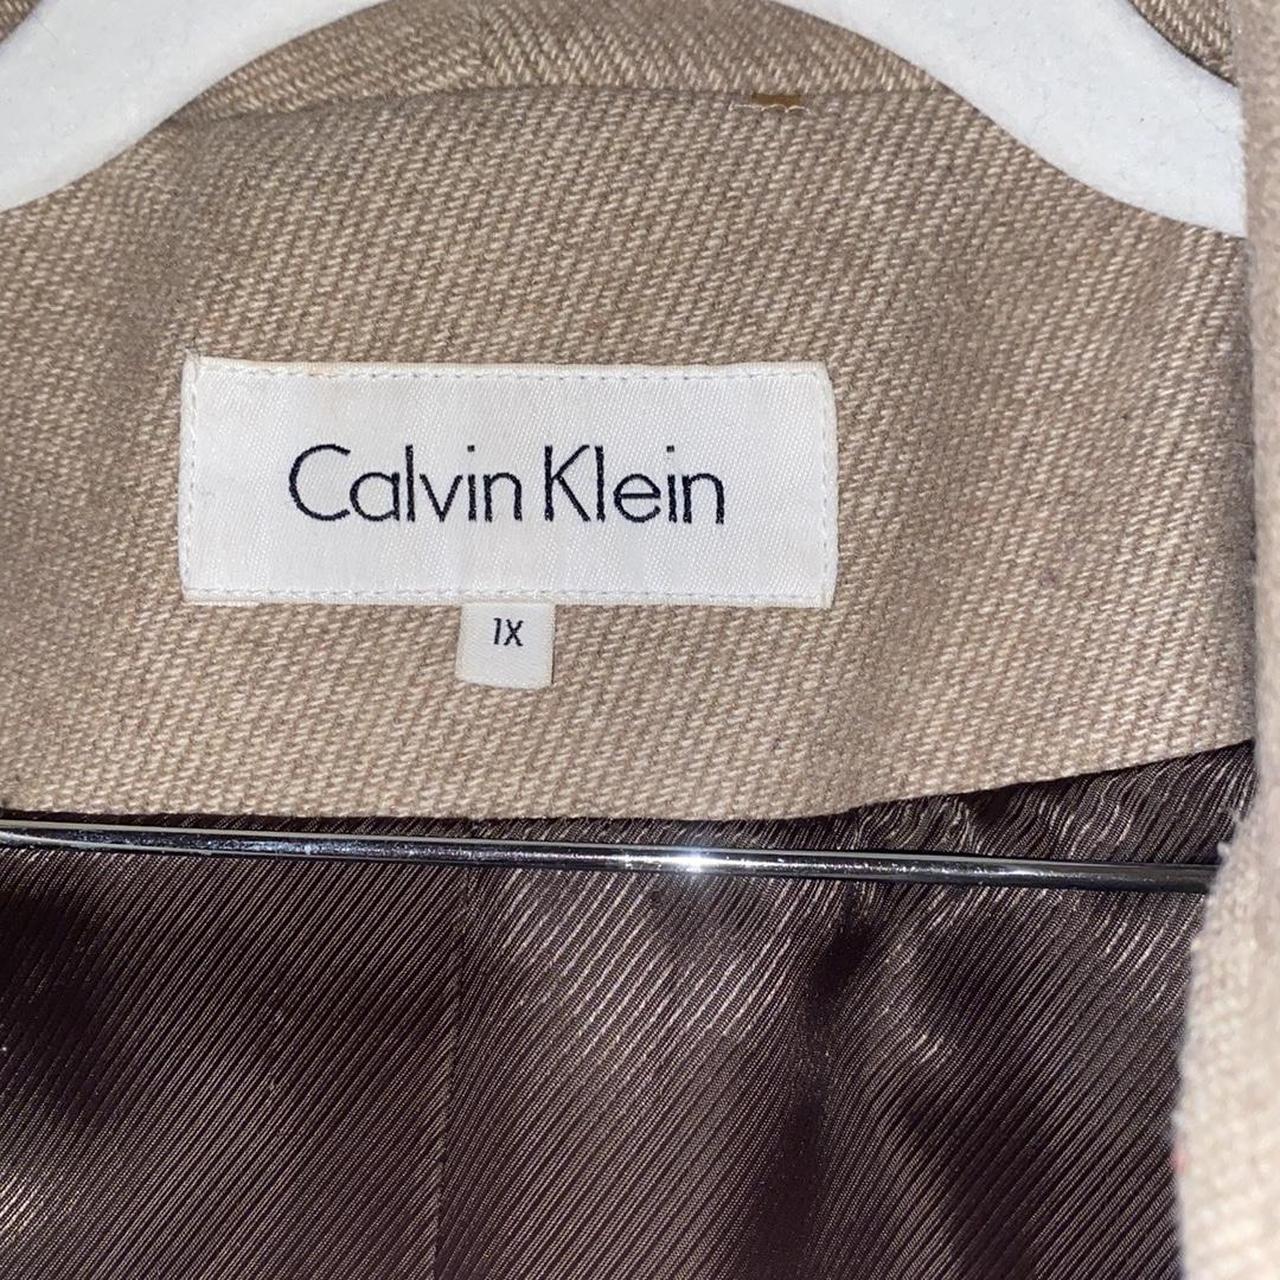 Vintage Calvin Klein trench coat - Depop